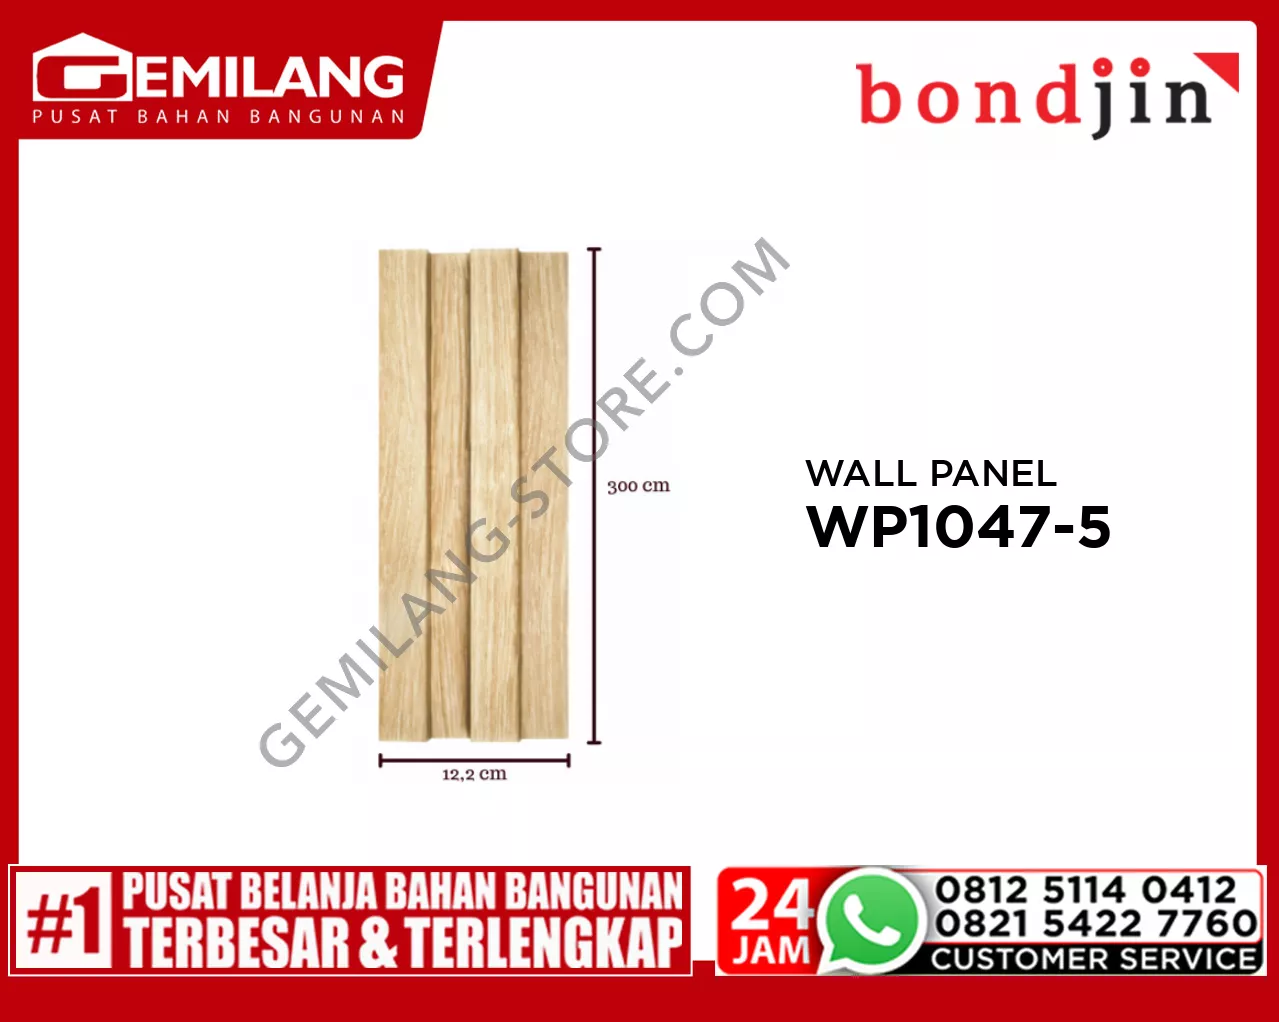 BONDJIN WALL PANEL WP1047-5 (122 x 3000 x 21)